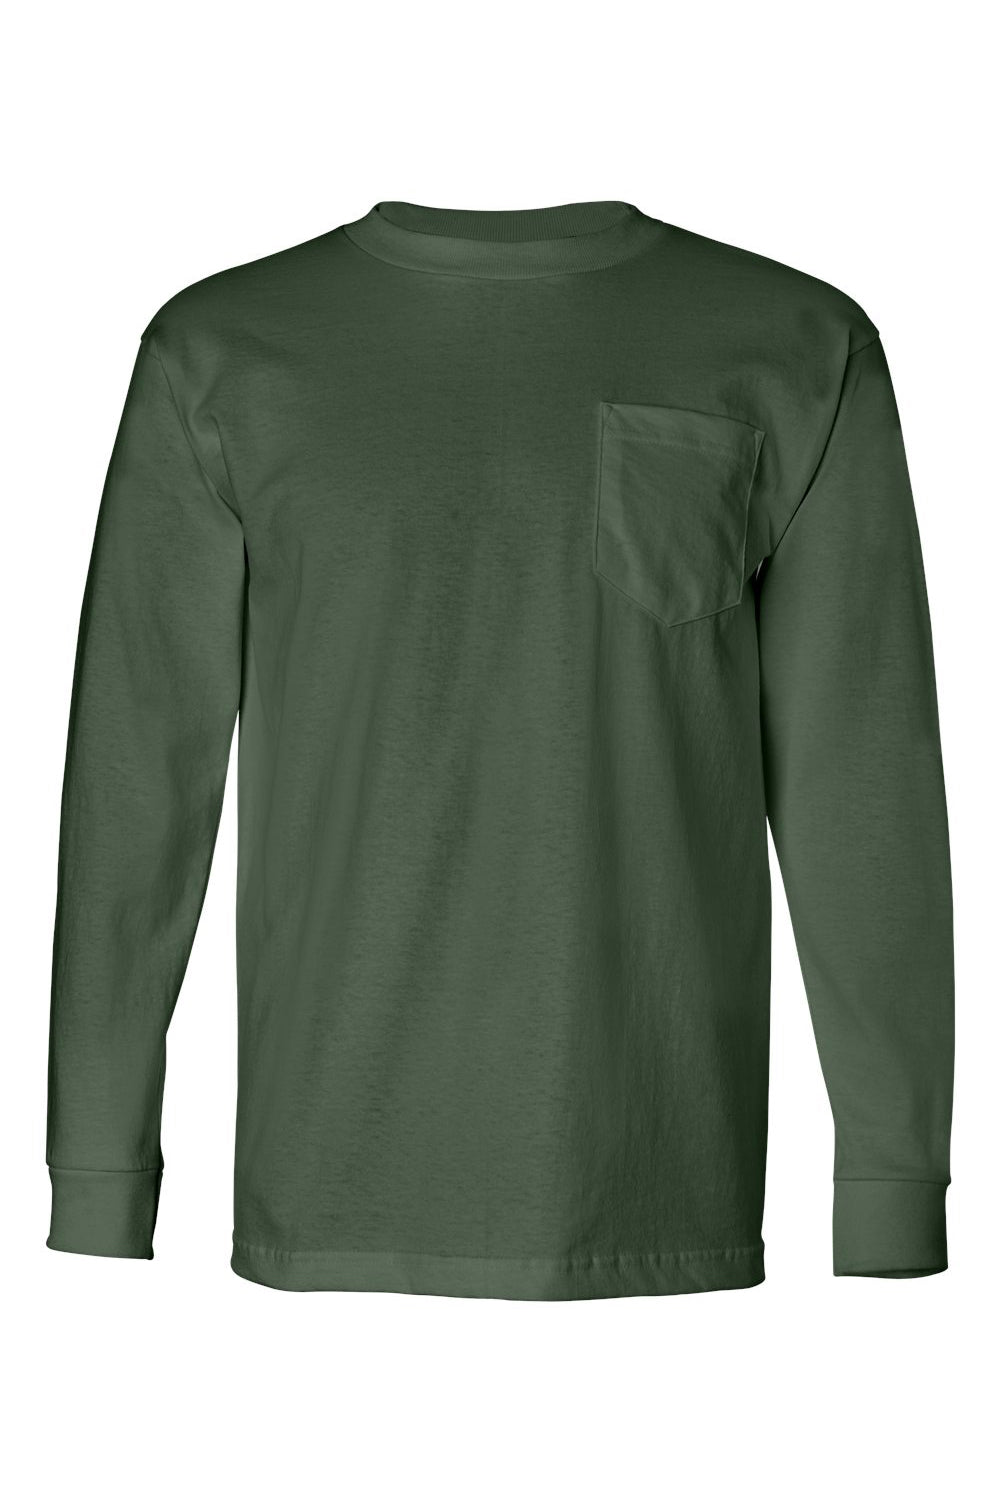 Bayside BA8100 Mens USA Made Long Sleeve Crewneck T-Shirt w/ Pocket Forest Green Flat Front